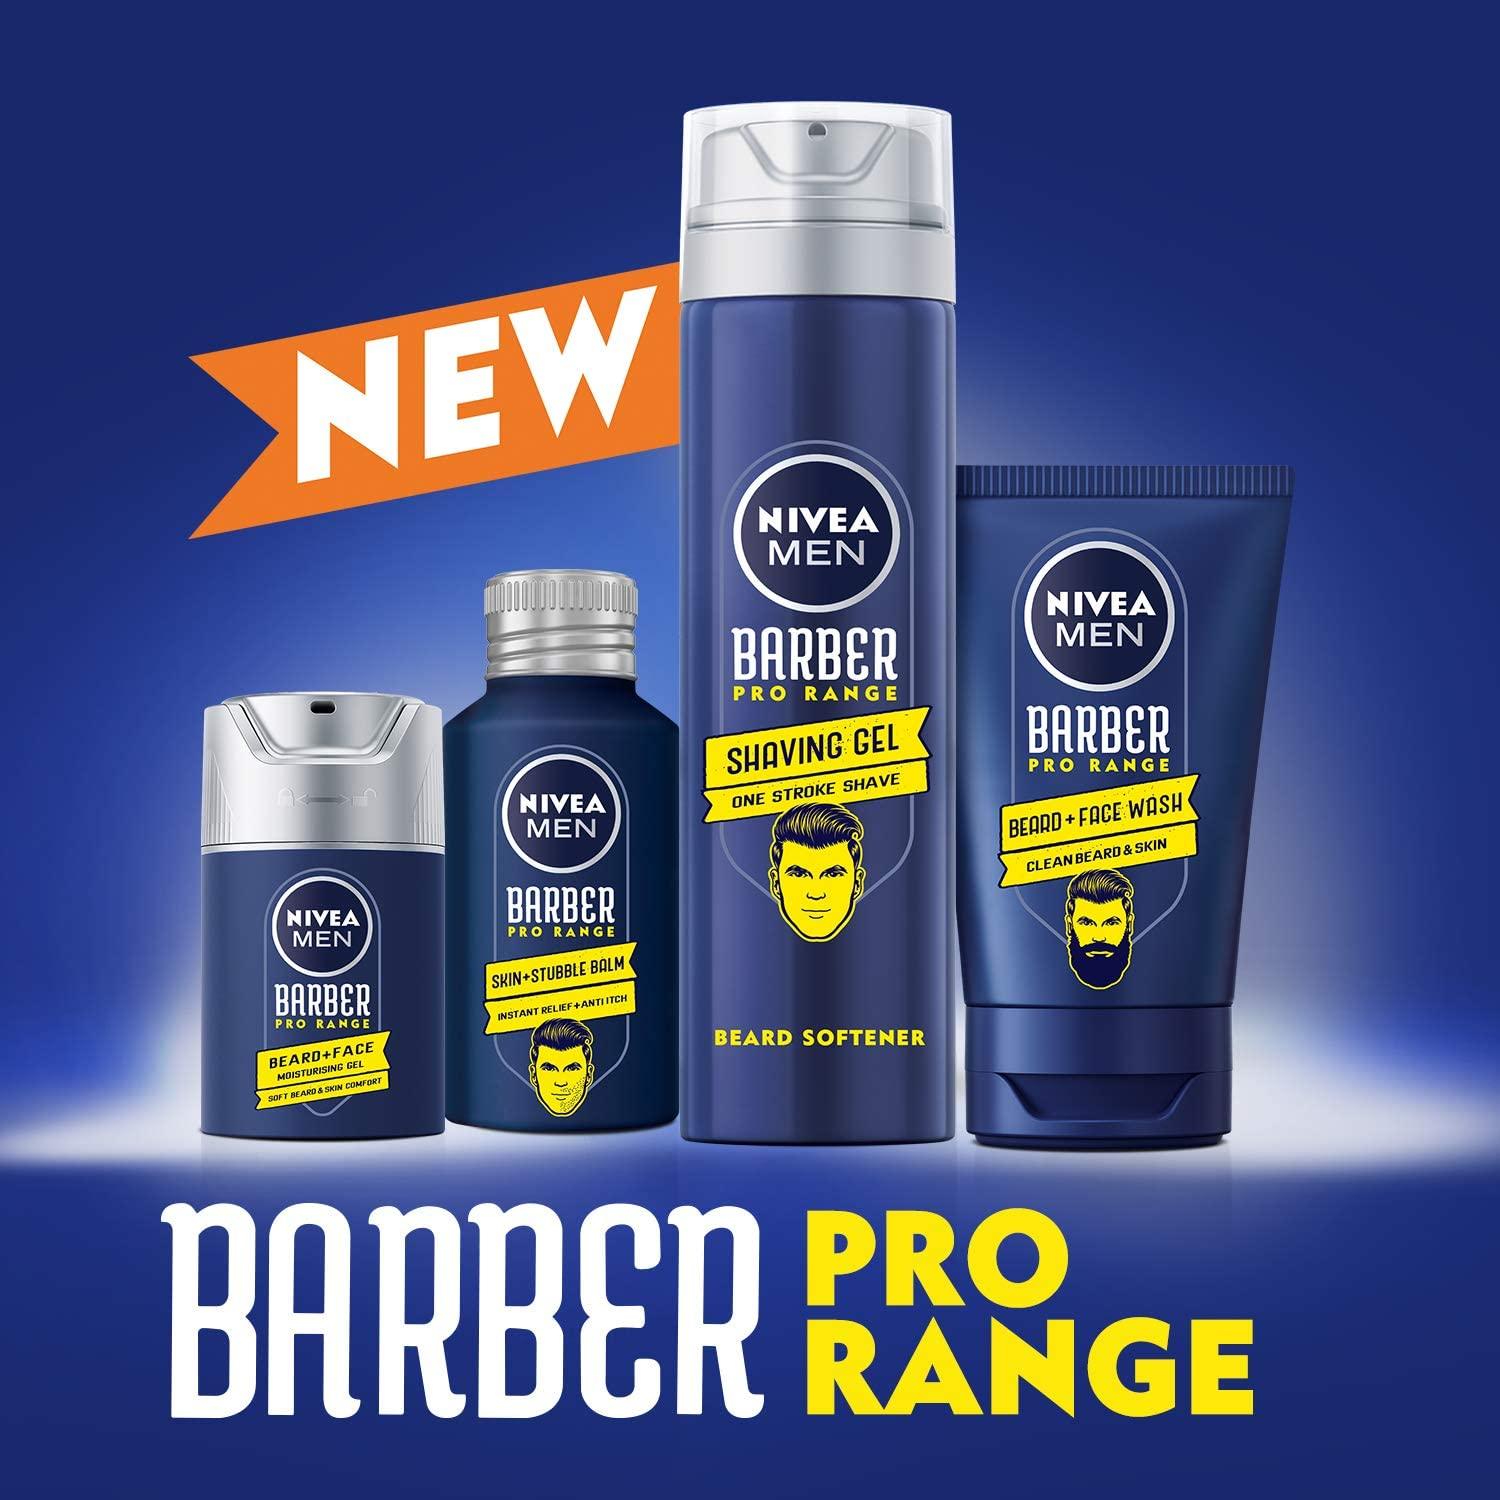 NIVEA MEN Beard & Face Wash Cleanser Barber Pro Range Clean & Soft Beard 100ml - Wellness Shoppee